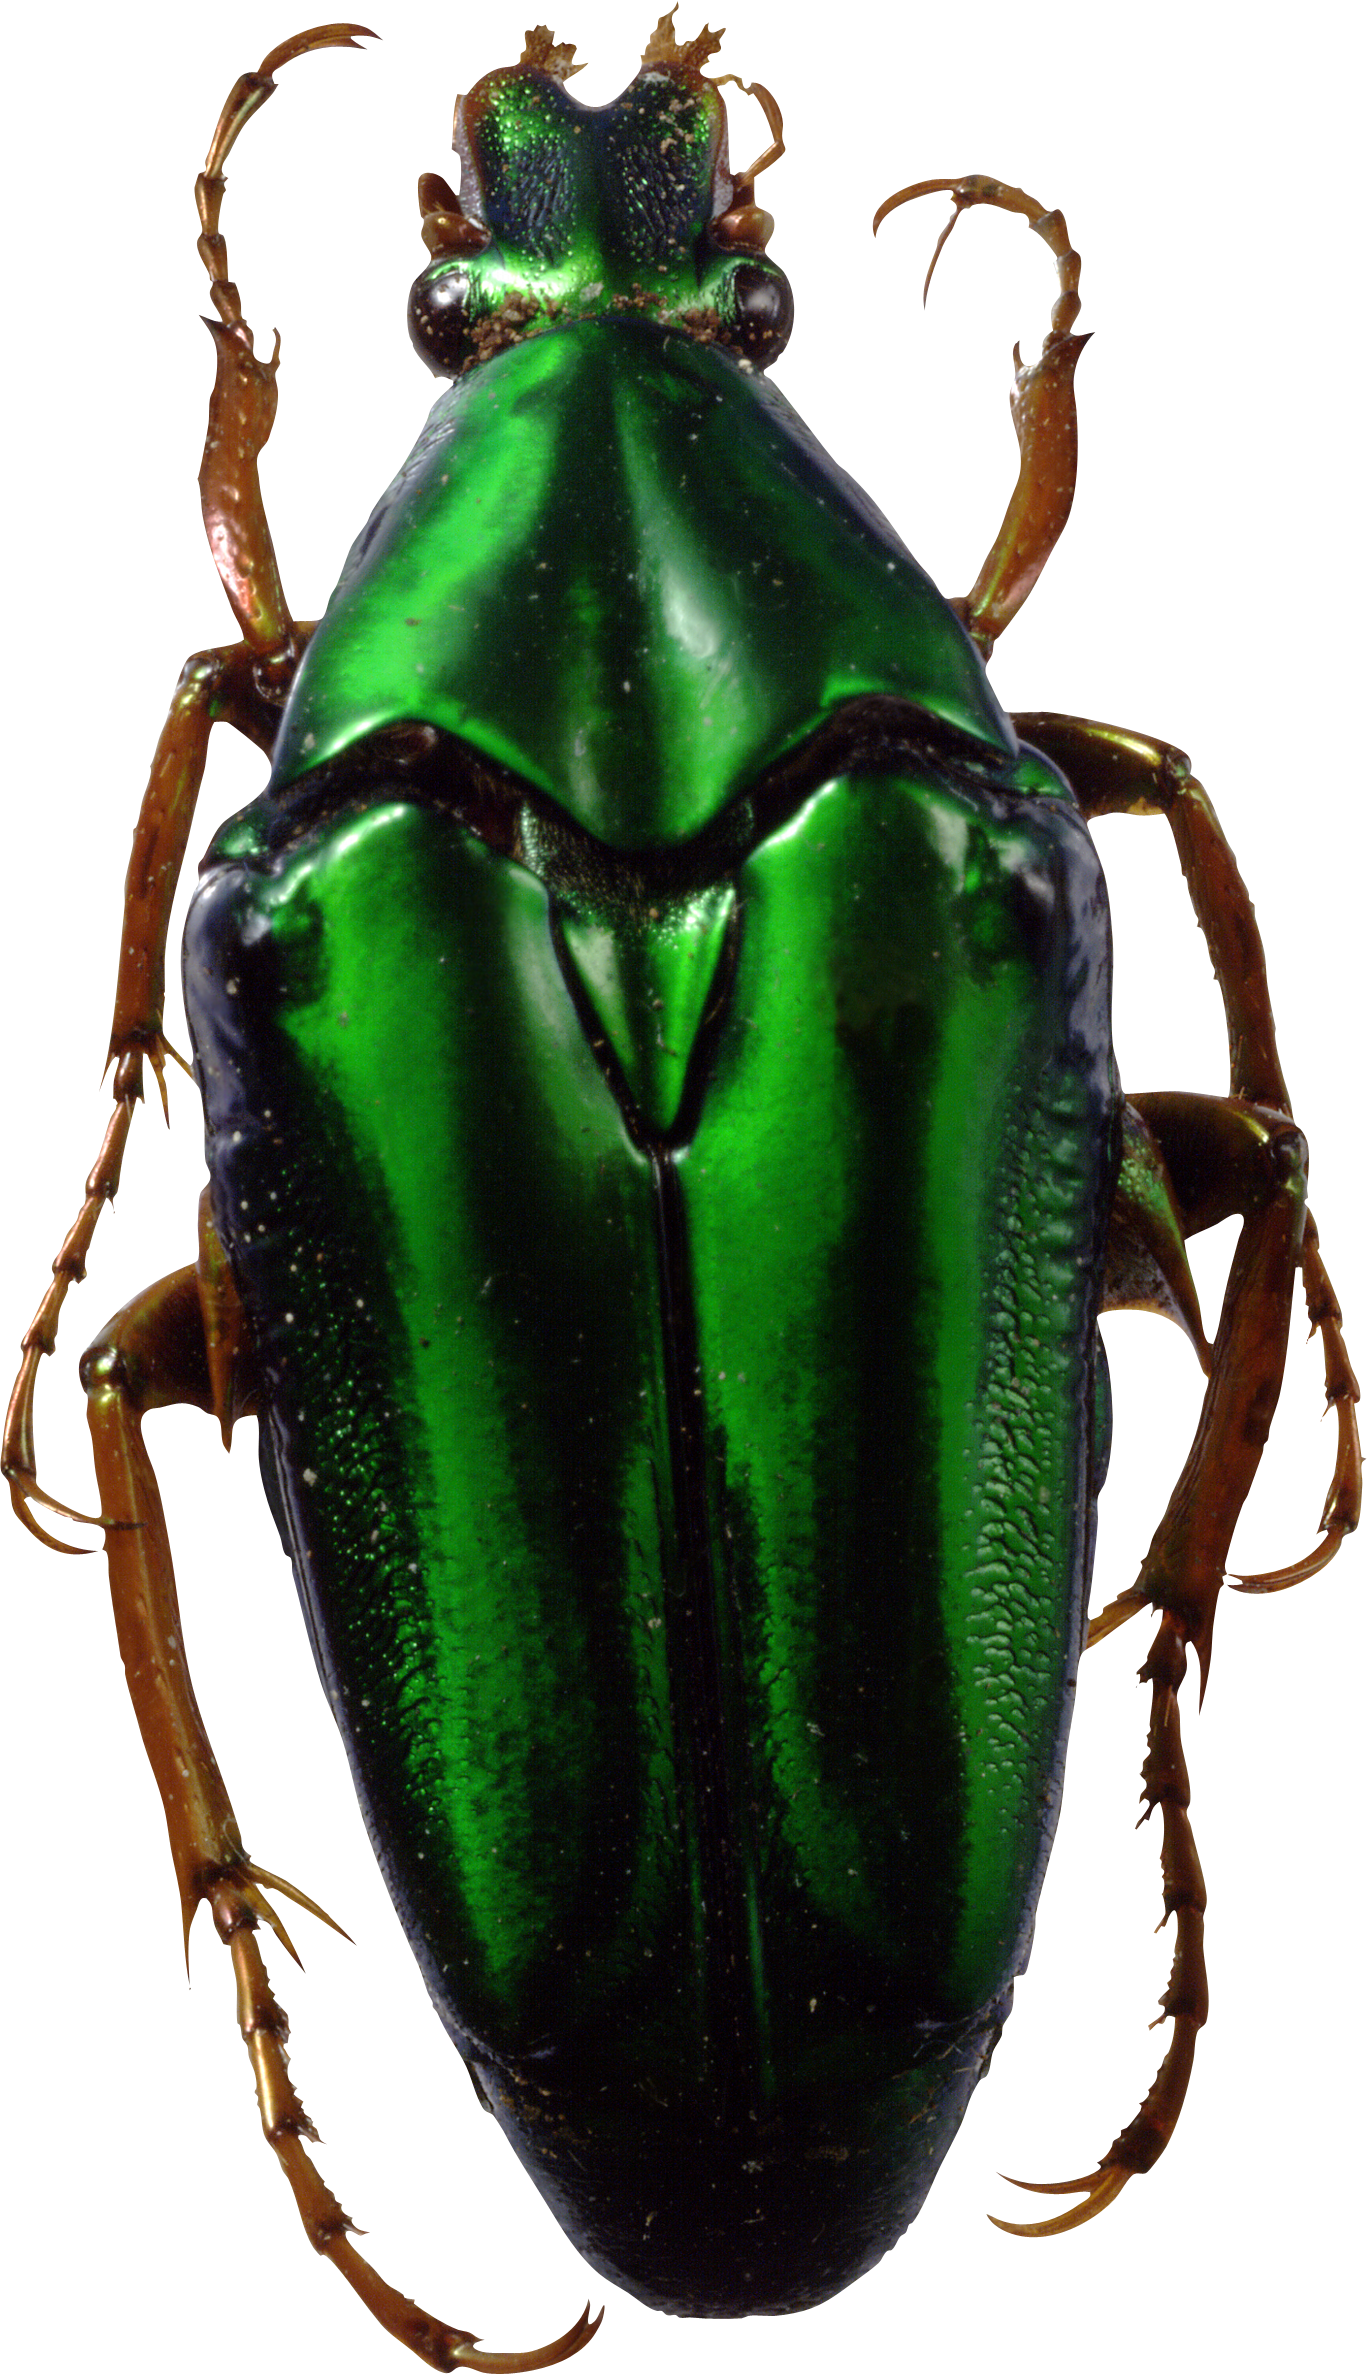 Kumbang hijau